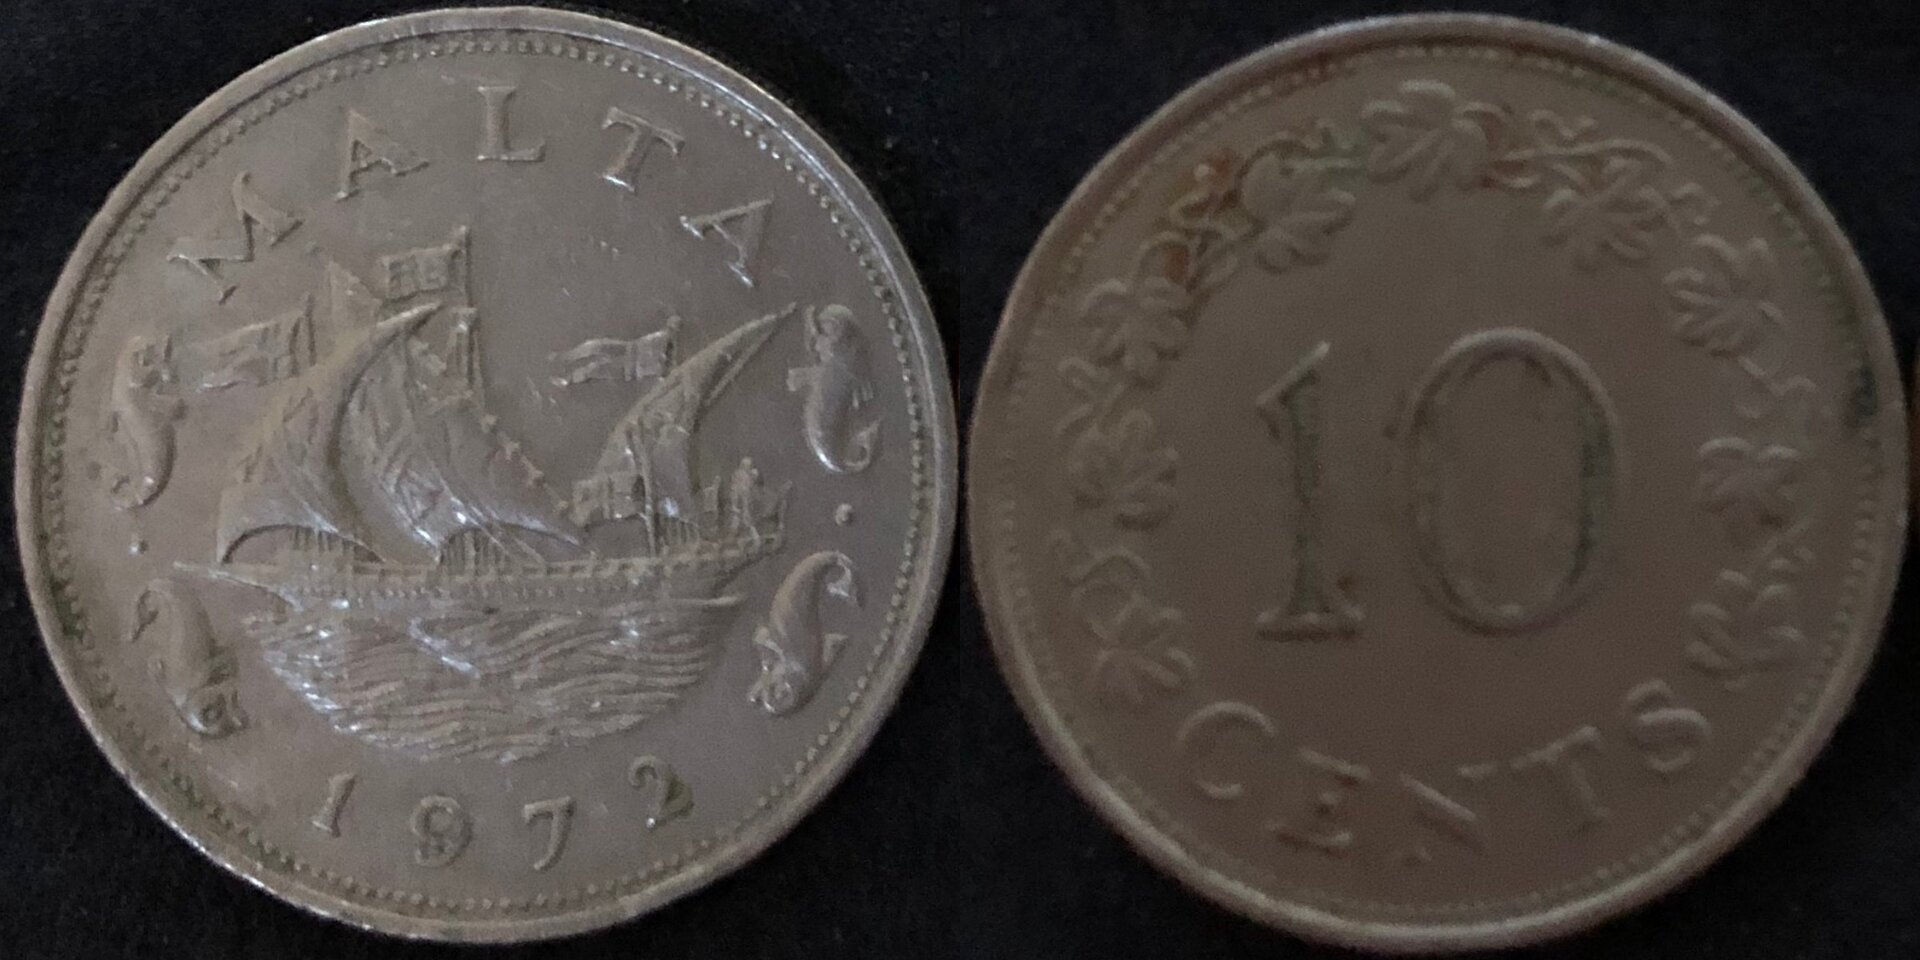 Malta 10 cents 1972.jpg